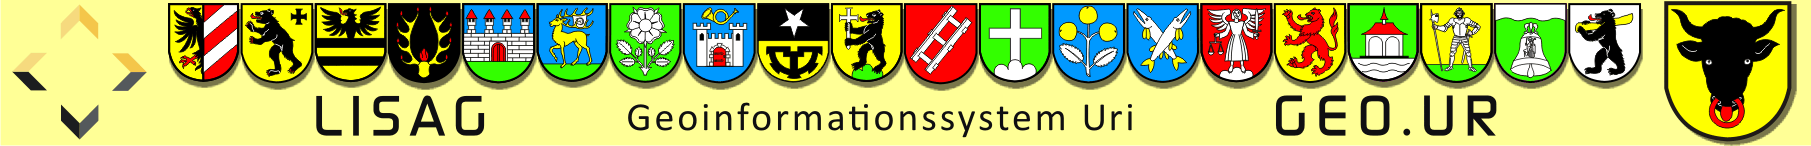 Logo Kanton Uri